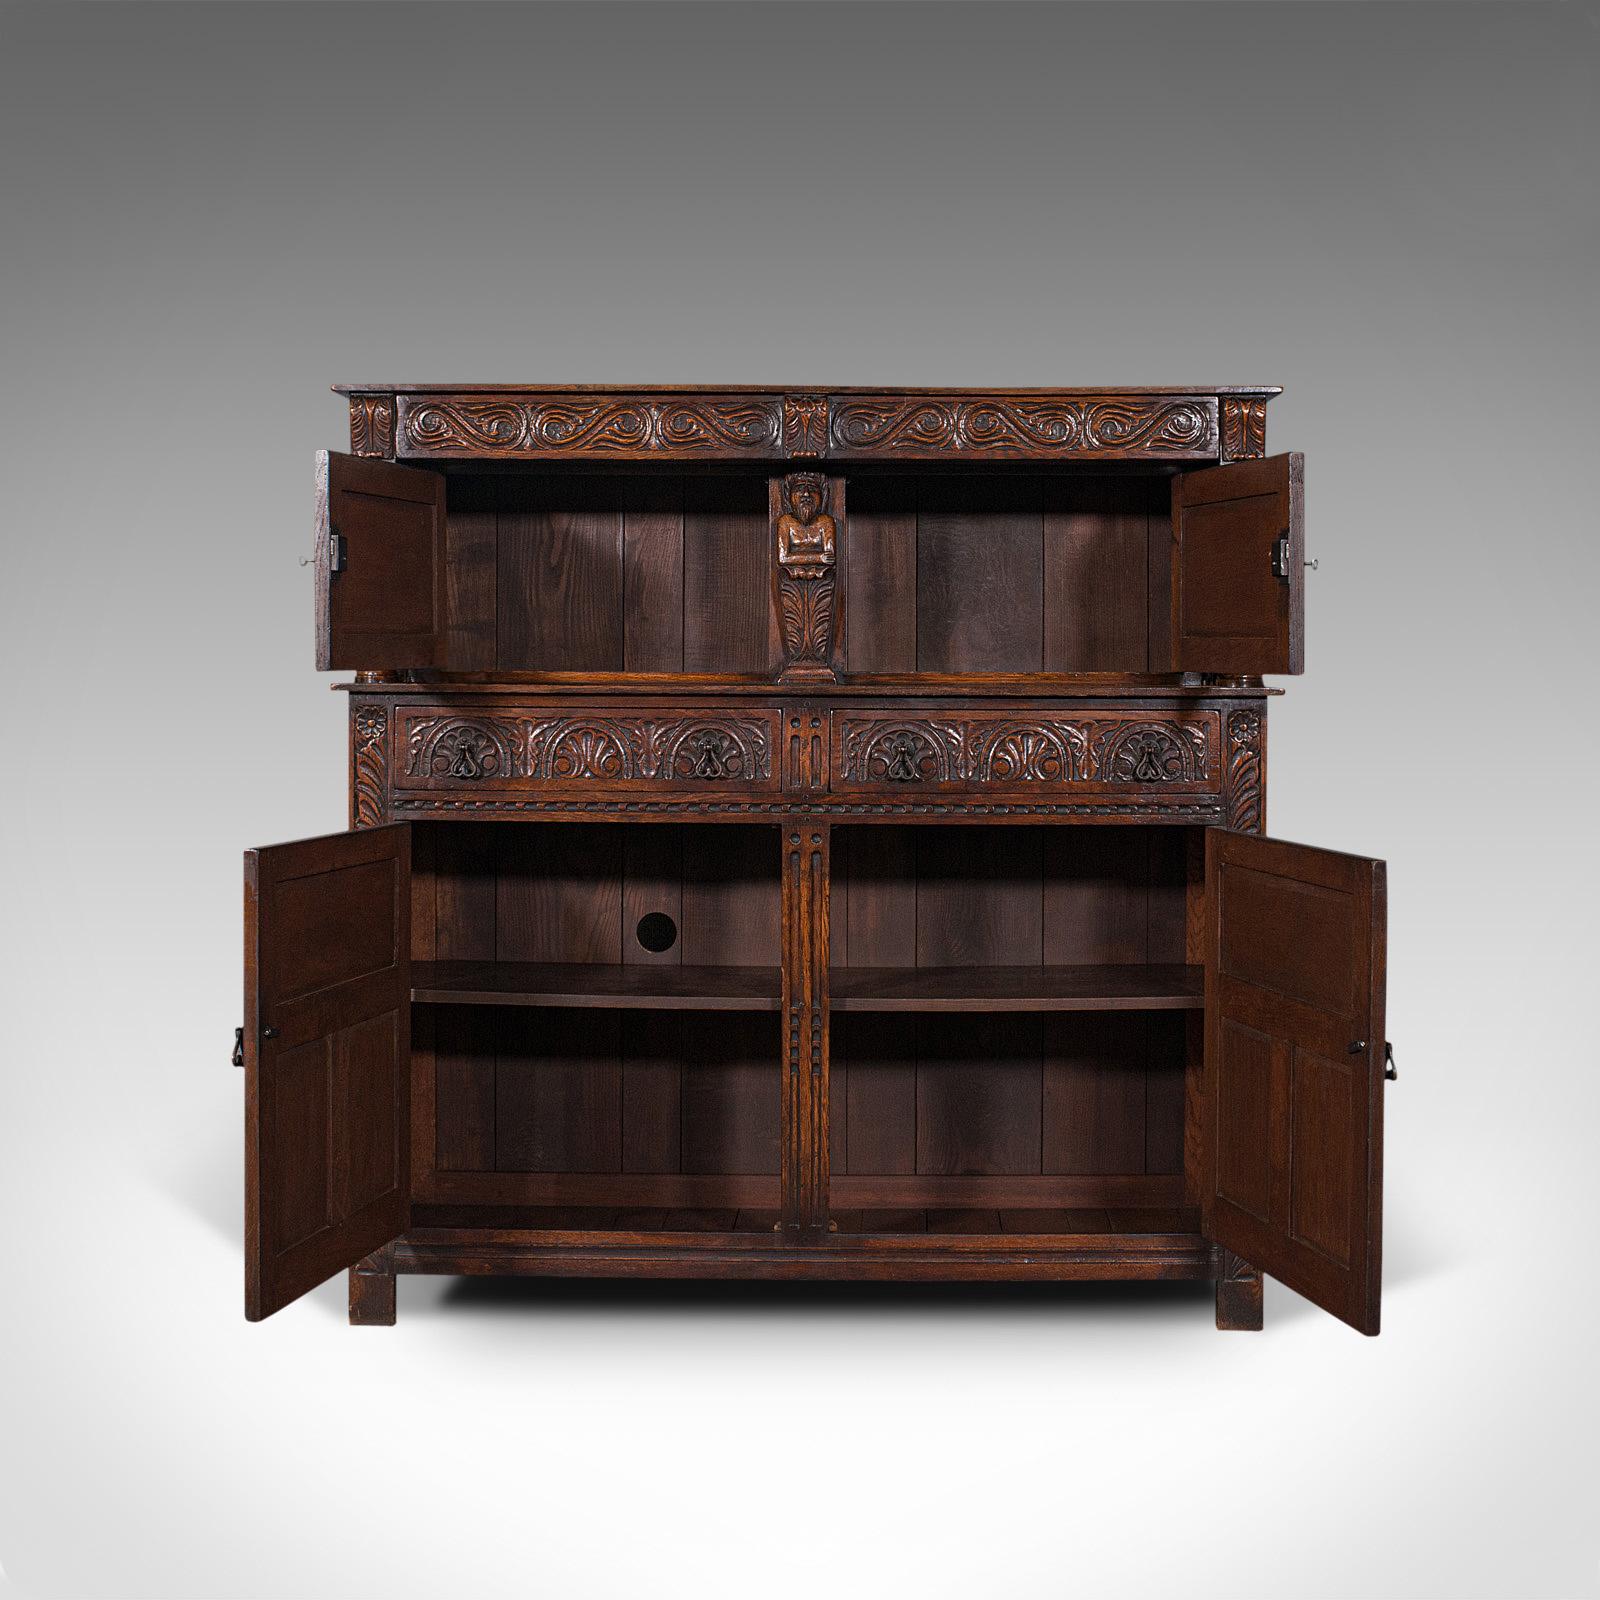 British Antique Court Cabinet, English, Oak, Sideboard, Credenza, Jacobean Revival, 1890